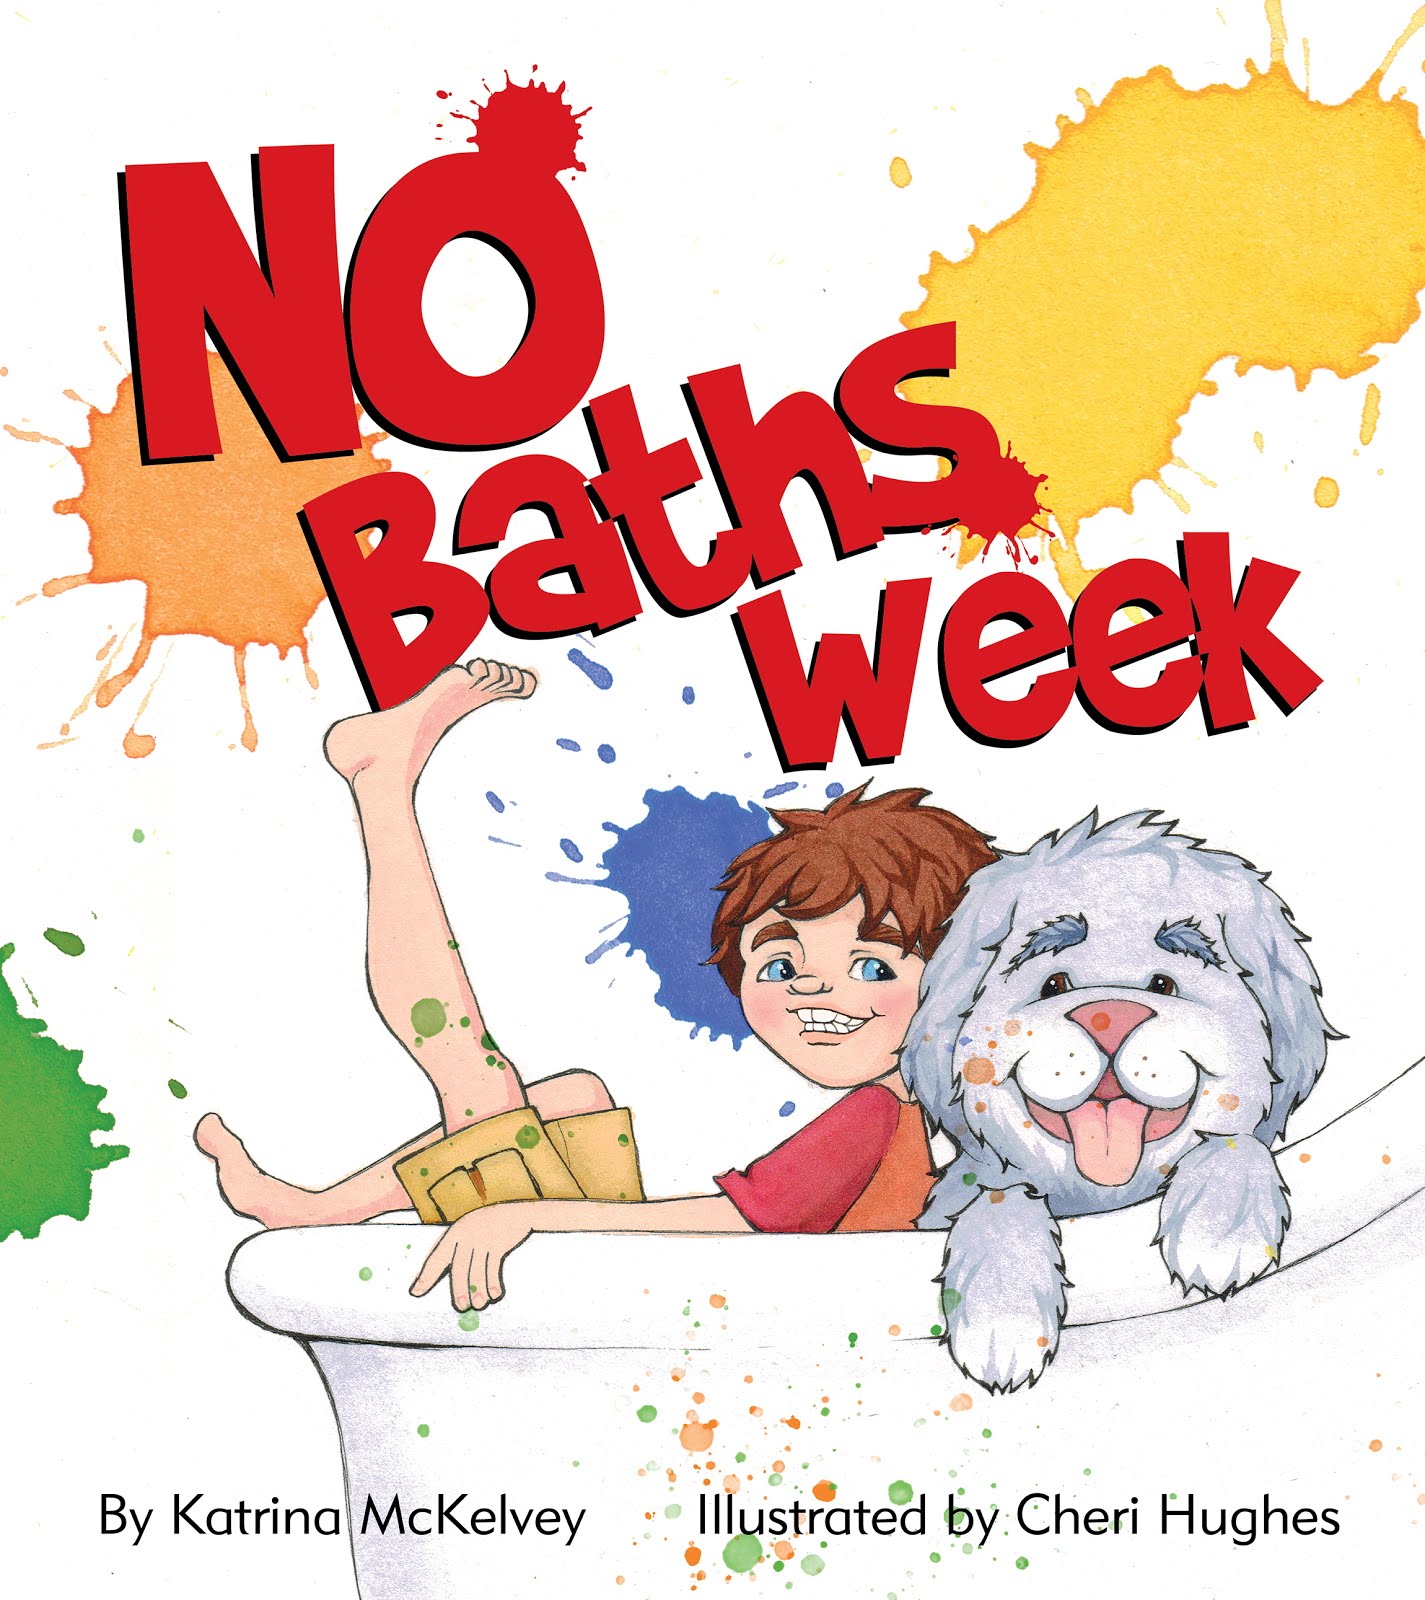 No Baths Week by Katrina McKelvey and Cheri Hughes